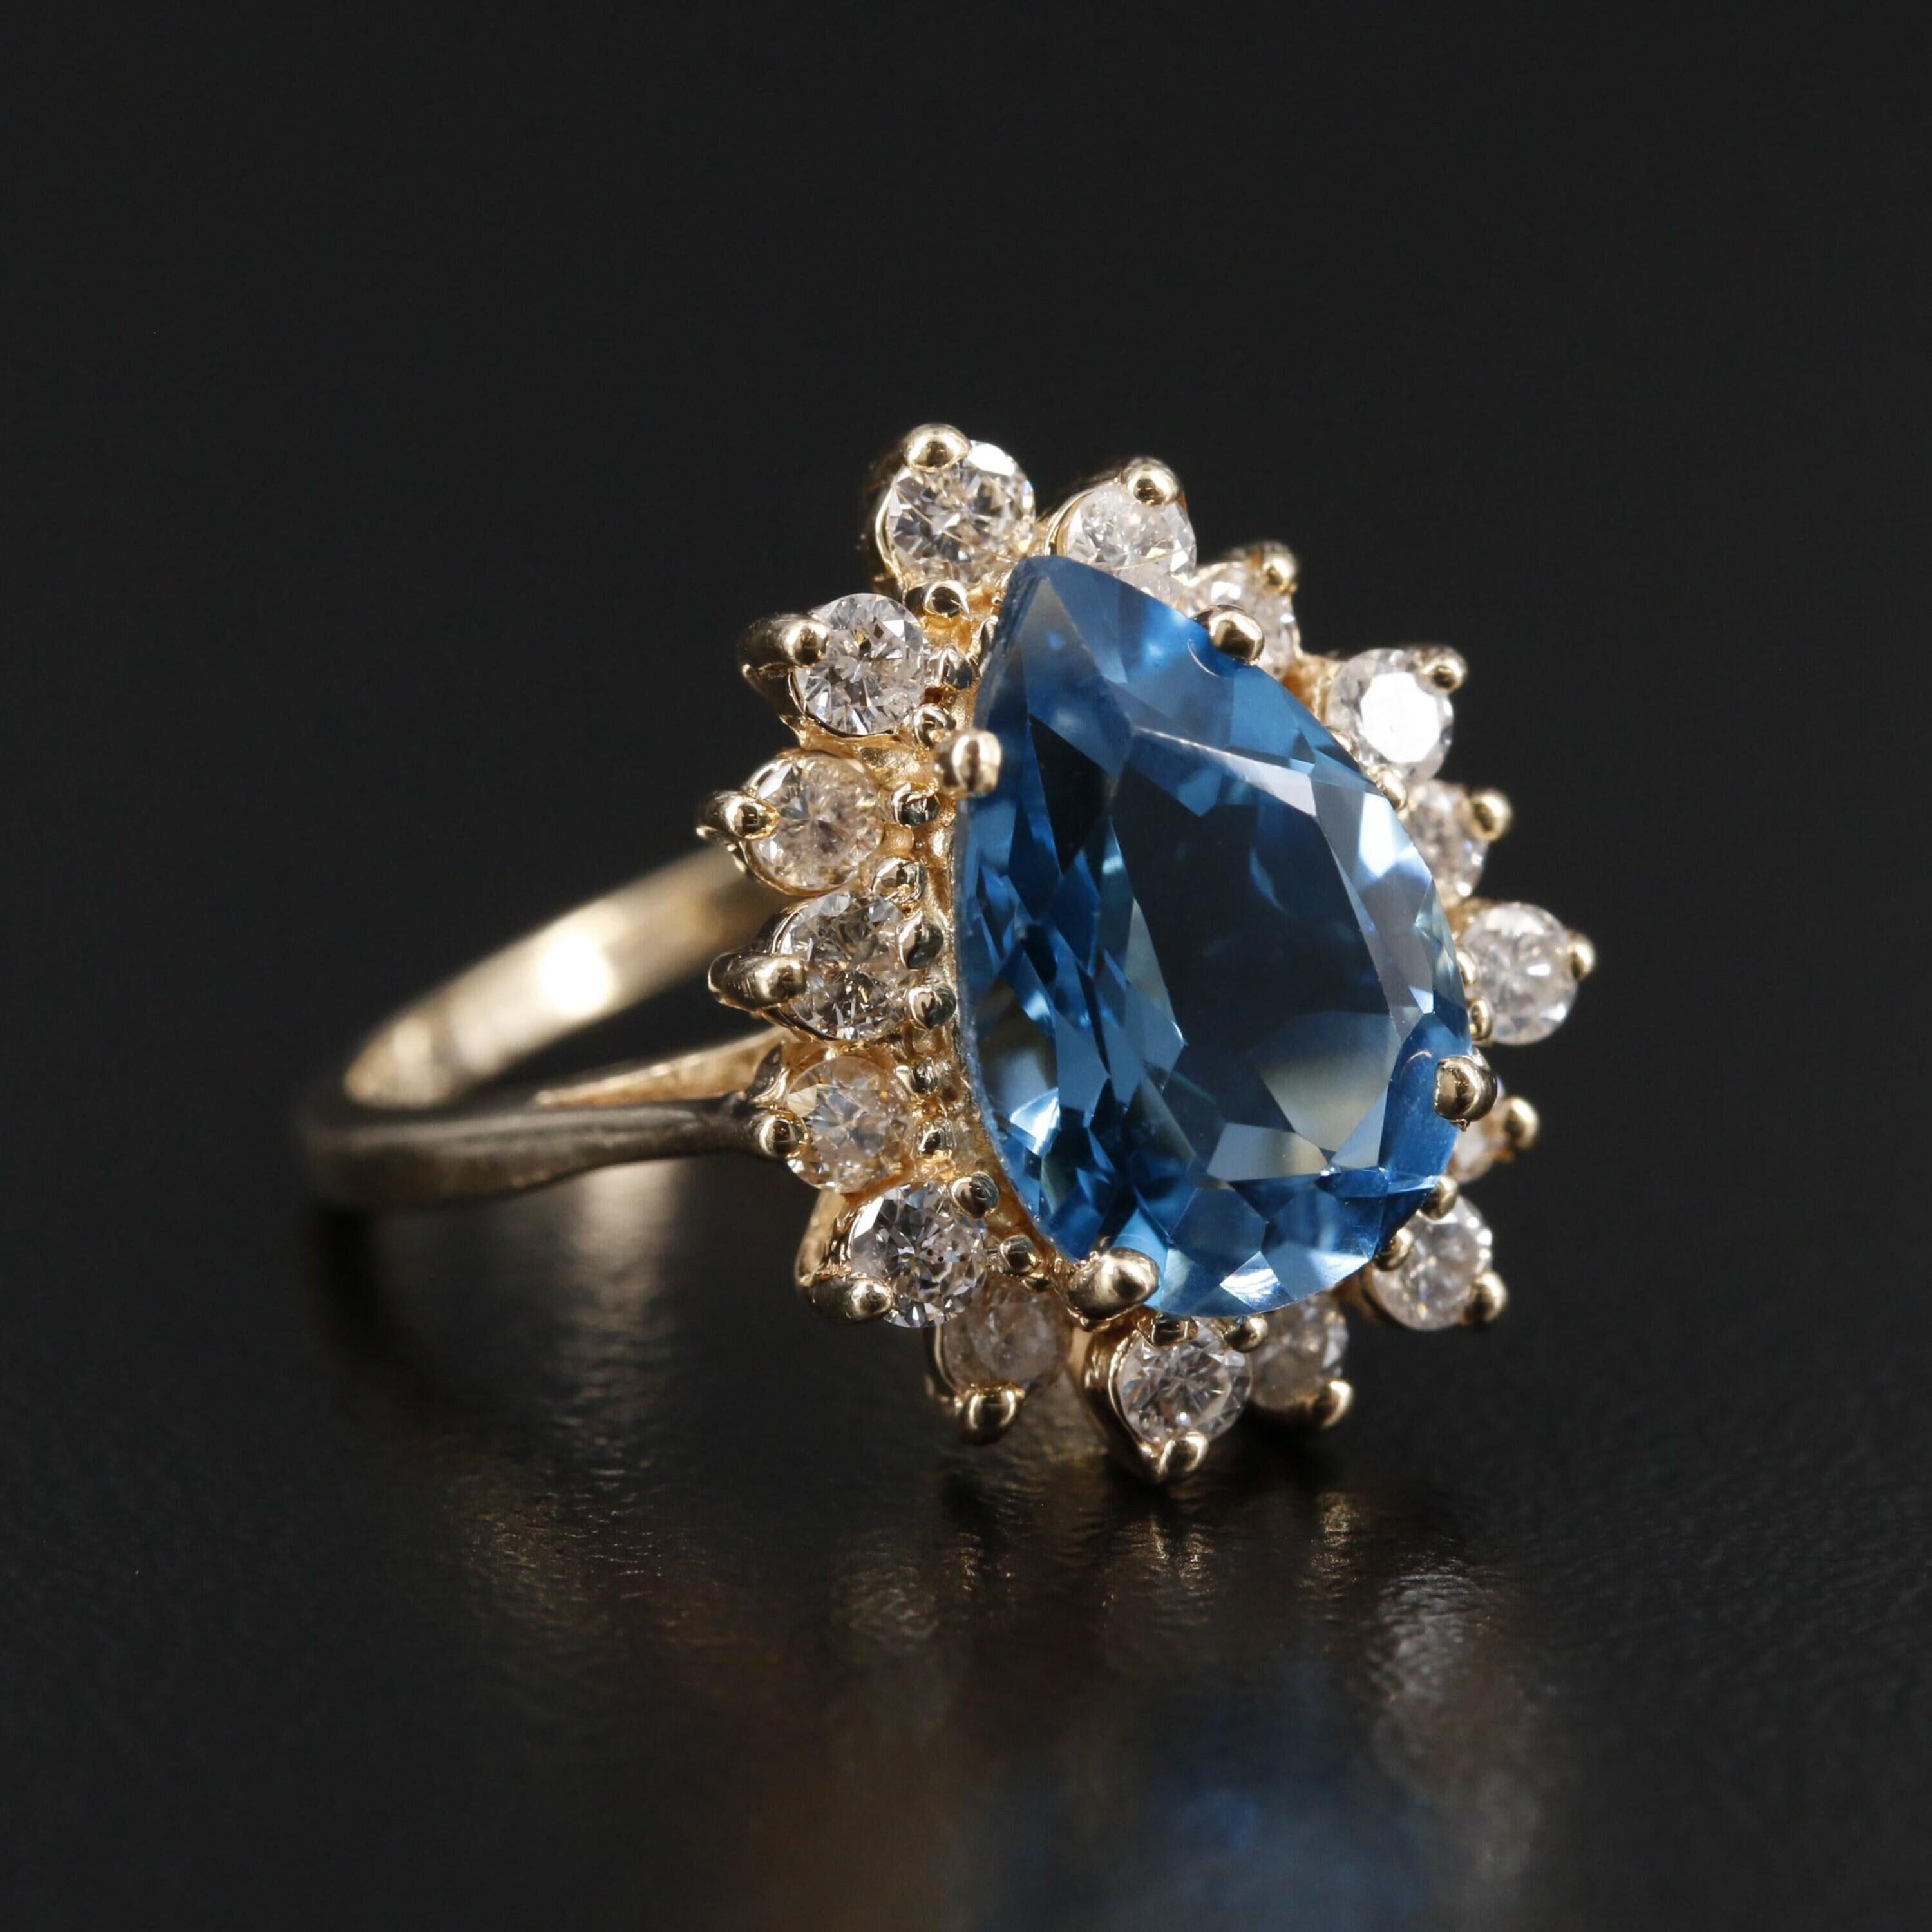 For Sale:  Vintage Pear Cut Aquamarine Engagement Ring, Art Deco Antique Wedding Ring 5